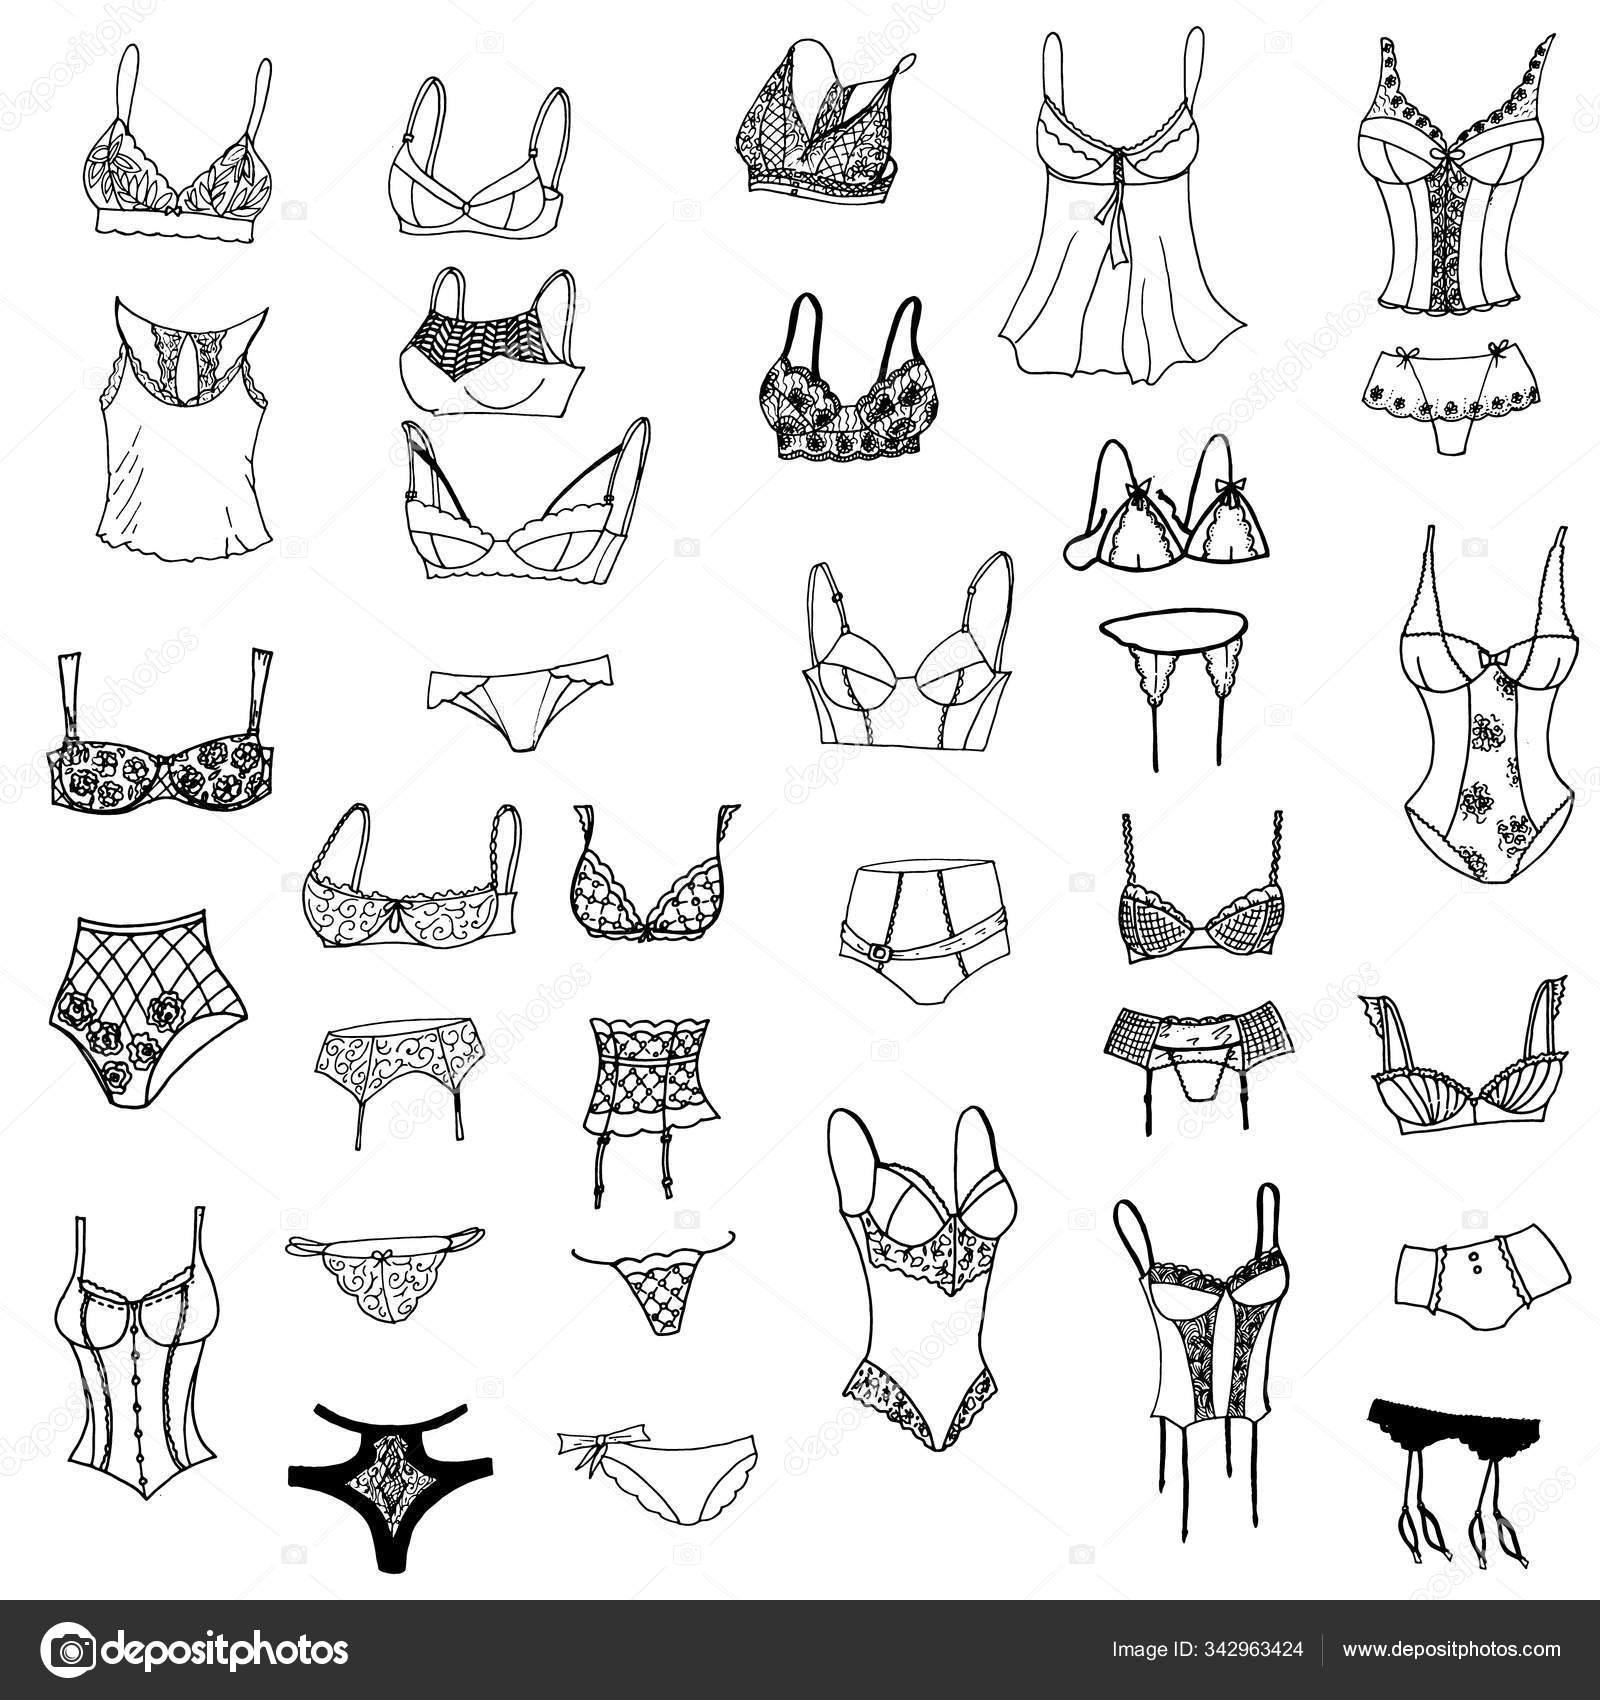 Bra panty set Vectors & Illustrations for Free Download